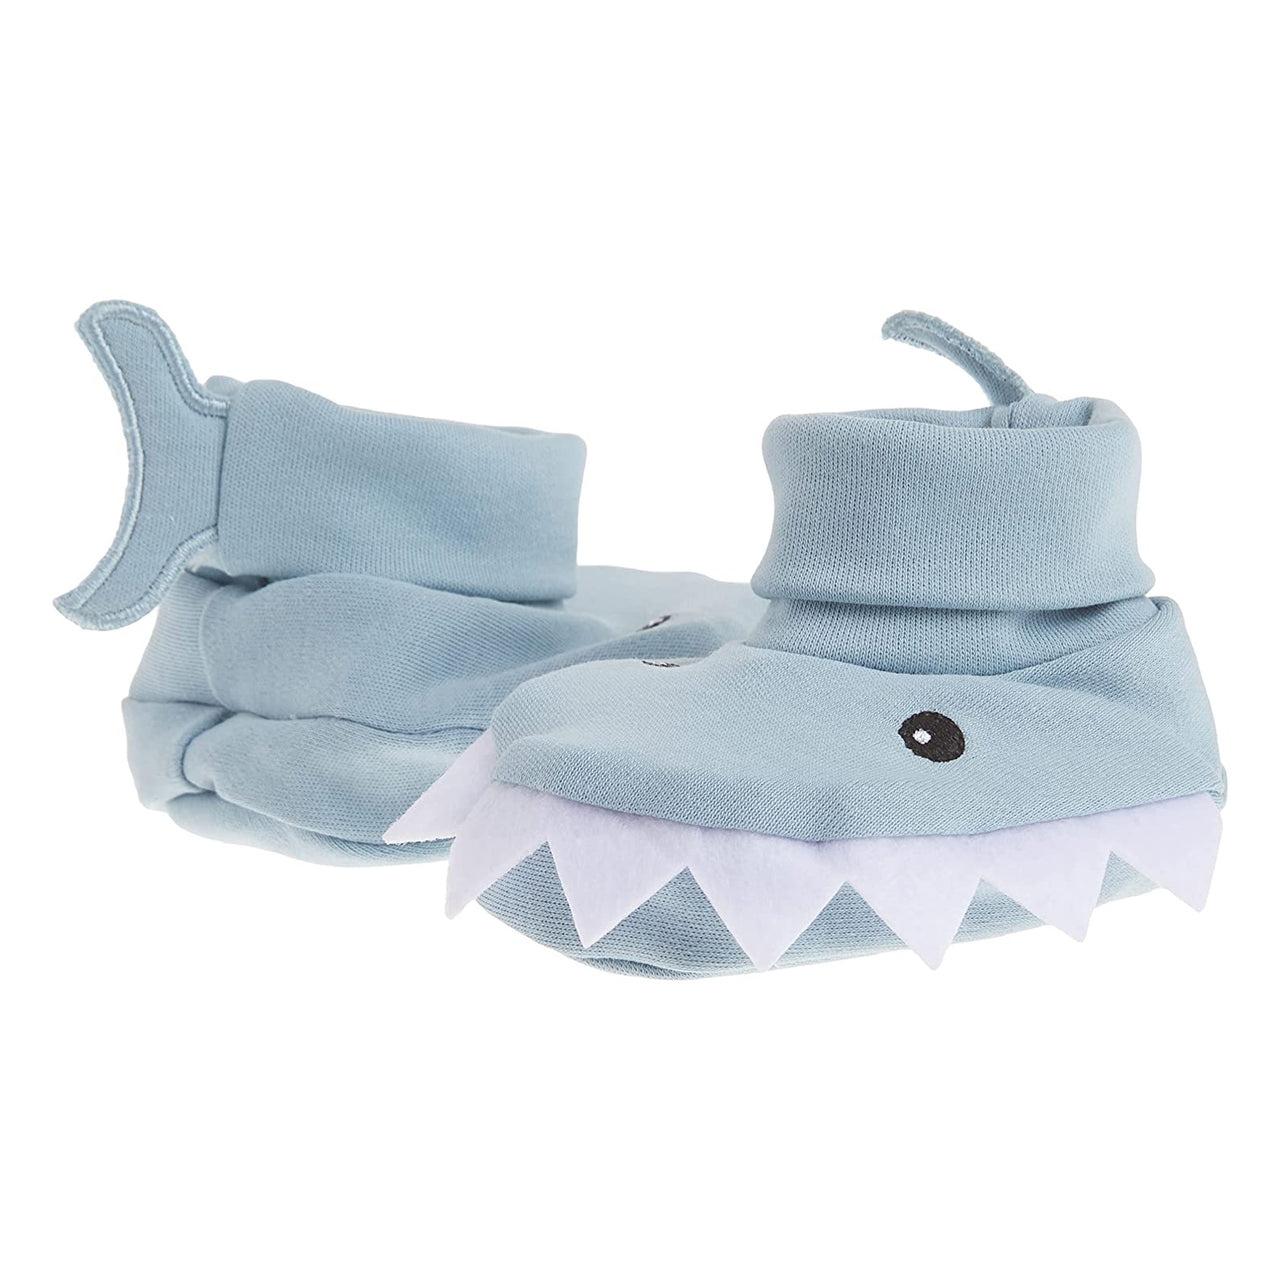 Chomp & Stomp Shark Bib & Booties Gift Set (Blue)